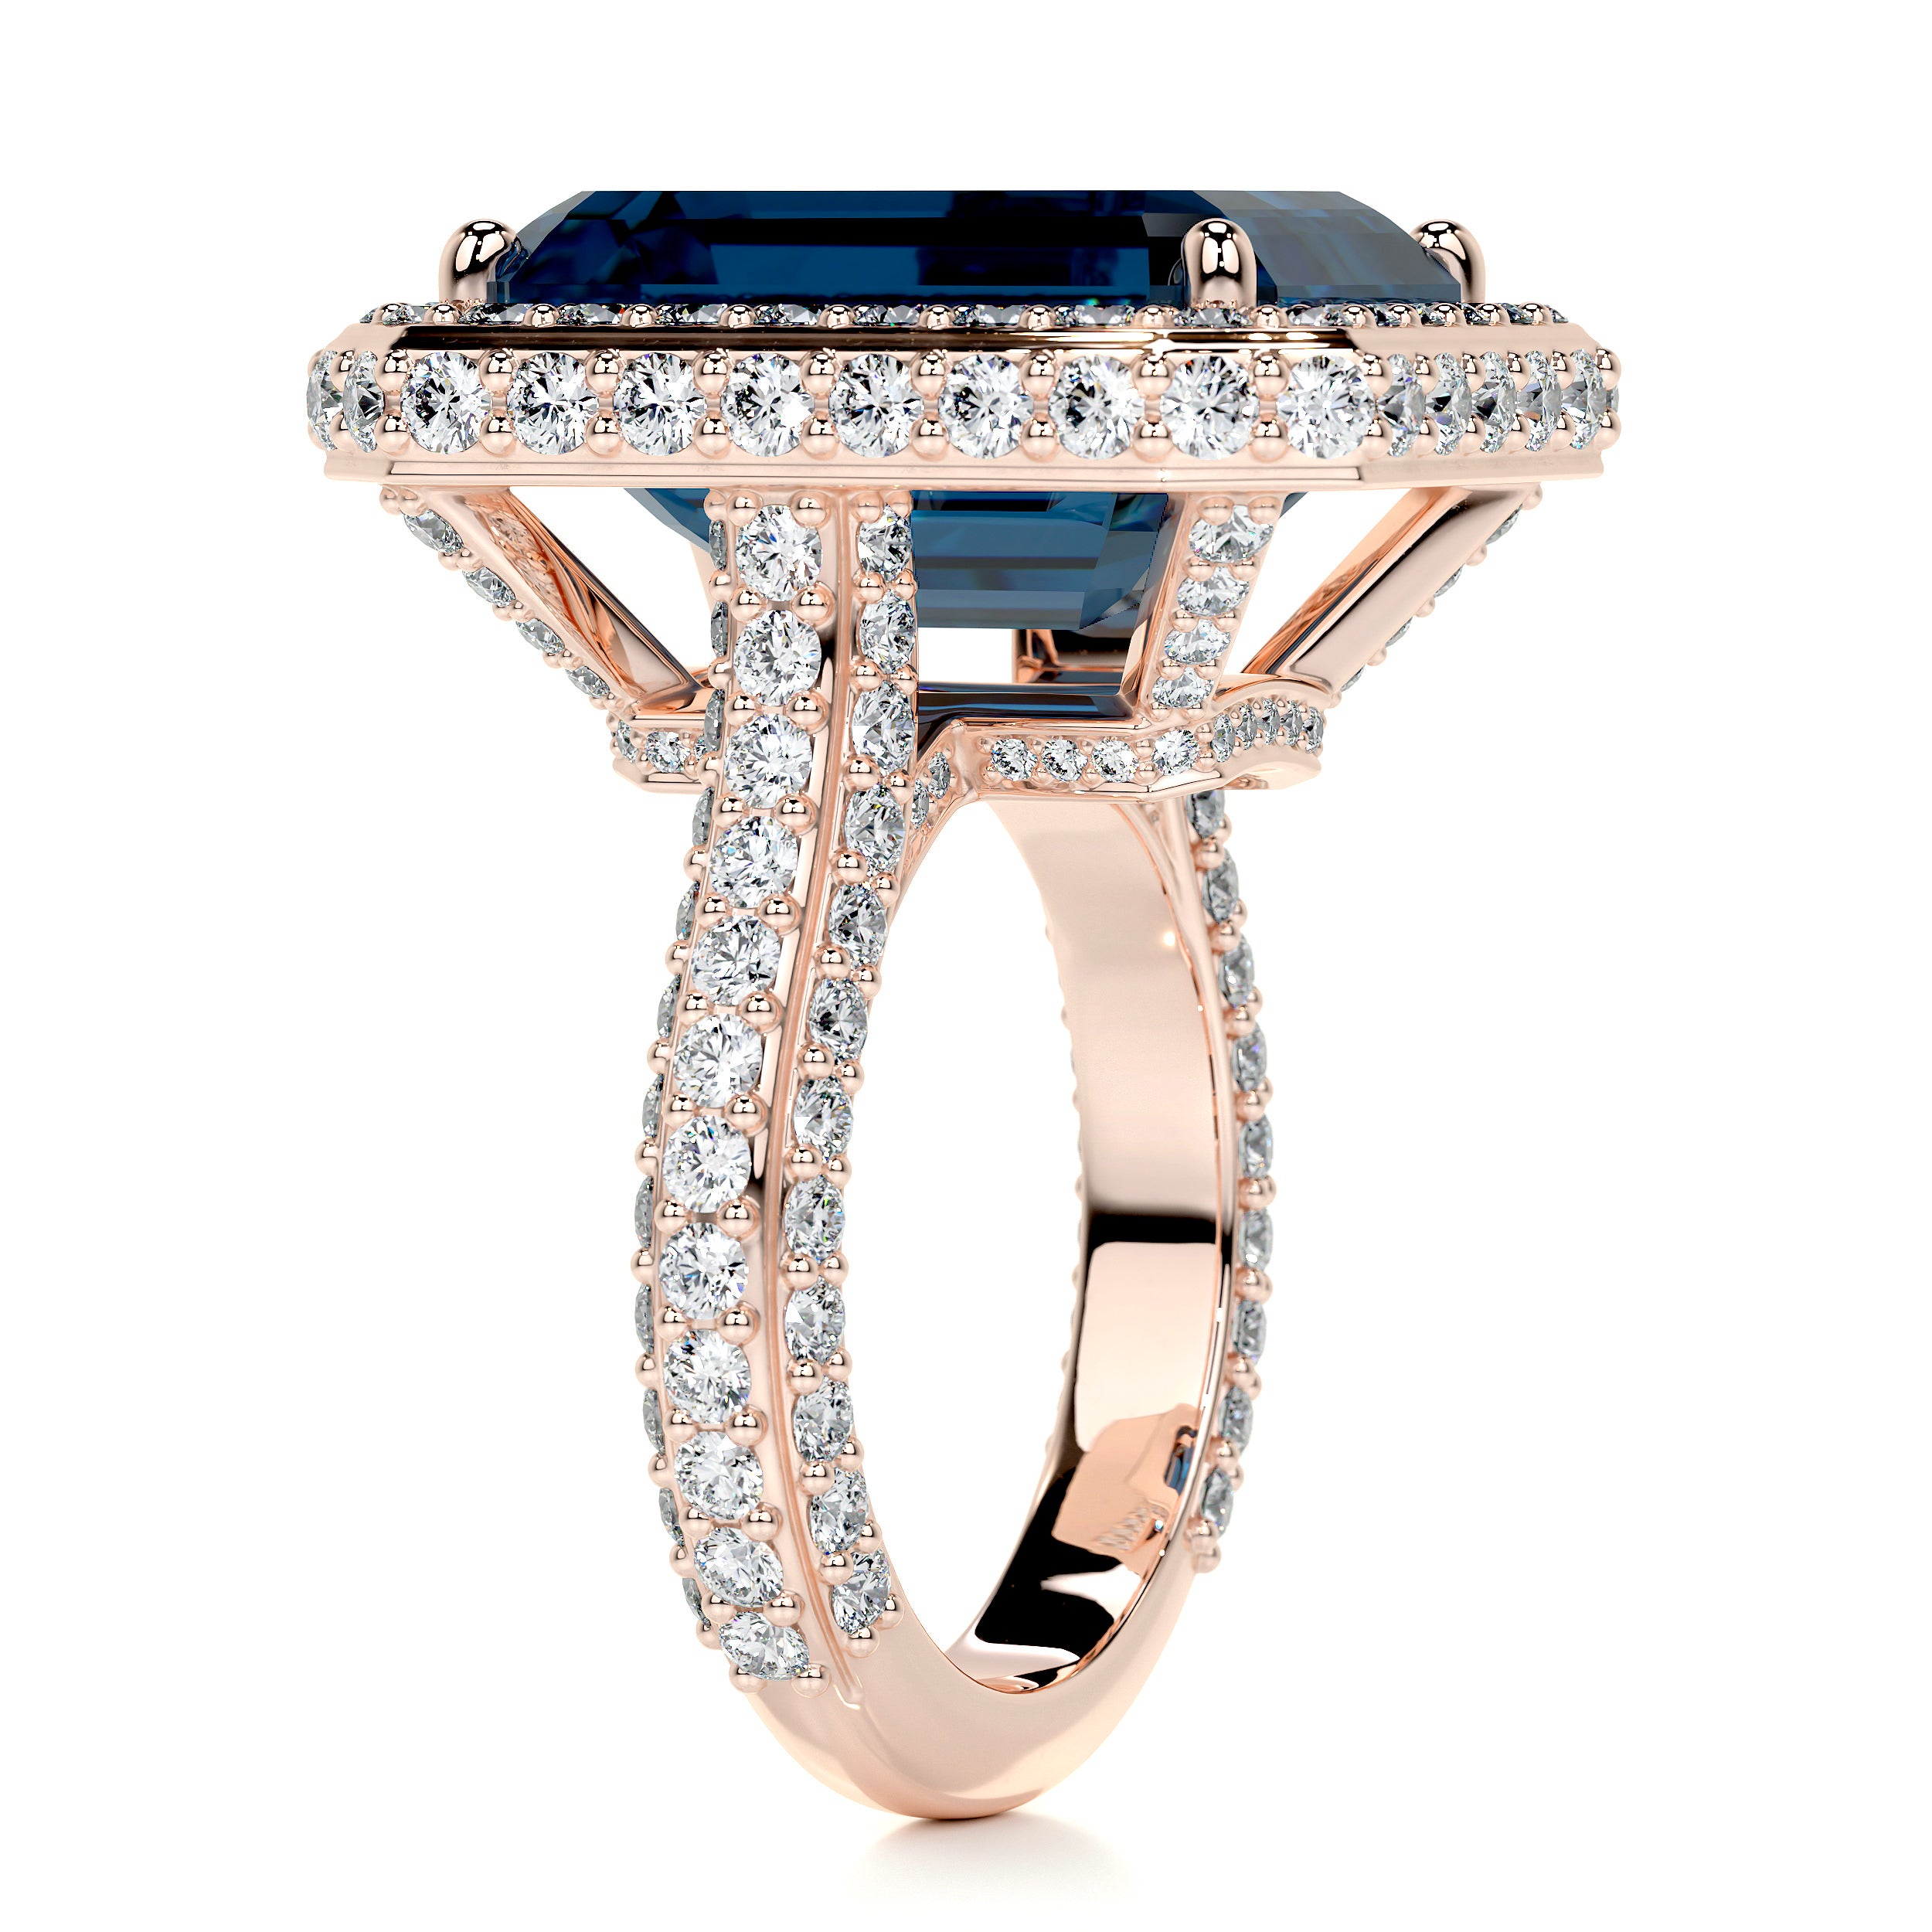 Mackenzie Gemstone & Diamonds Ring   (12 Carat) -14K Rose Gold